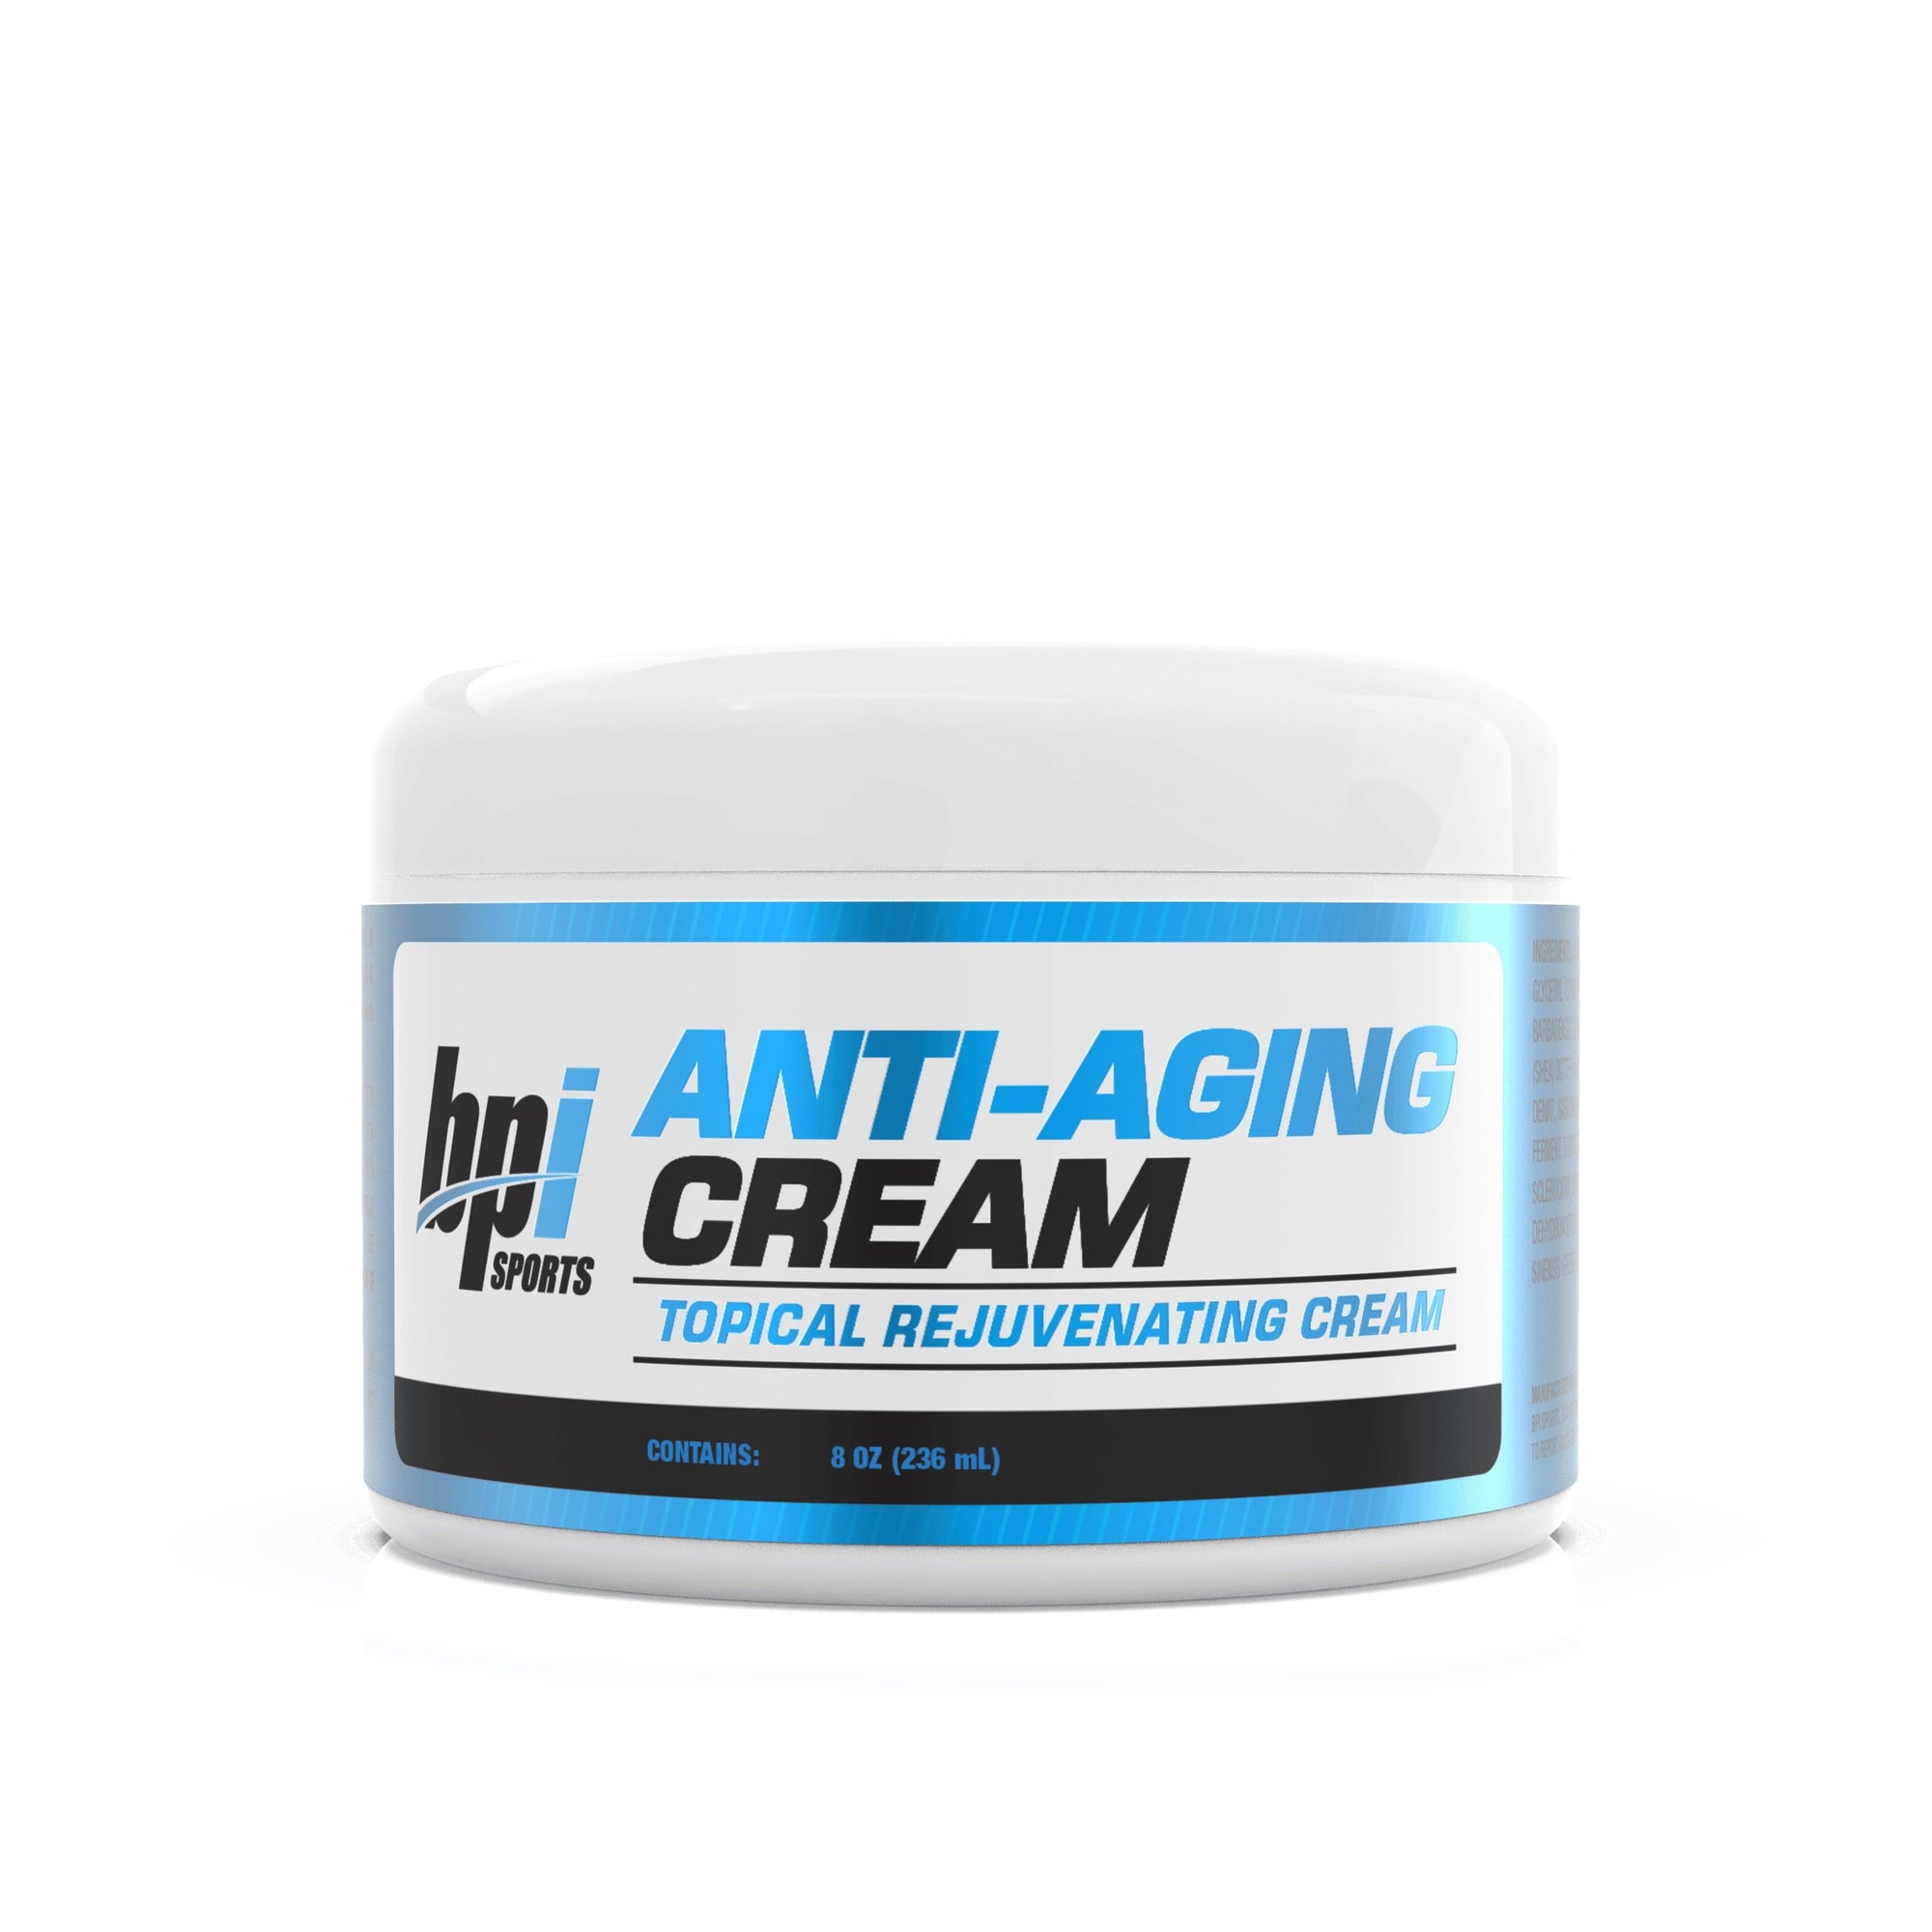 BPI Sports Anti-Aging Cream Jar. Total rejuvenating cream. 8 ounces/ 236 ml.